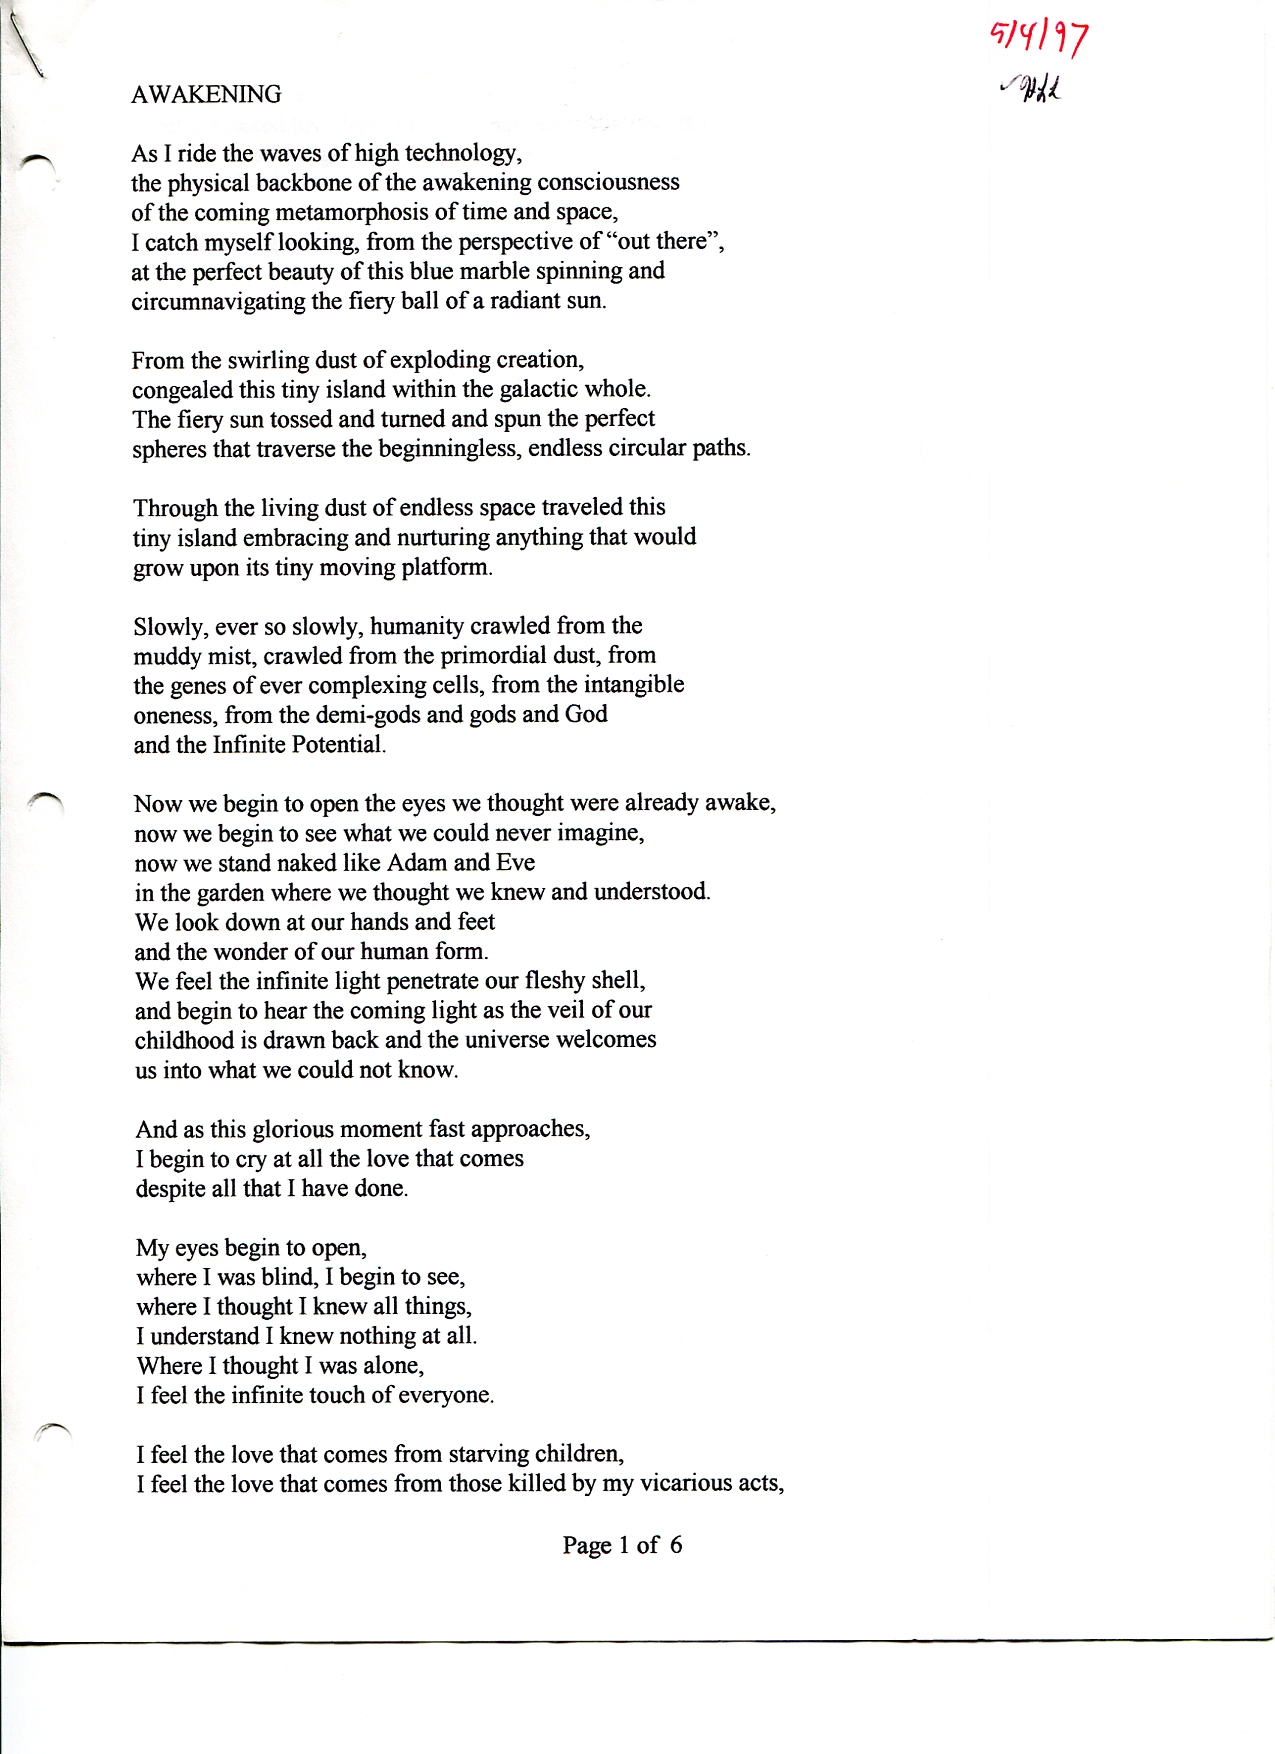 John WorldPeace Poems 1997 | World Peace Poems